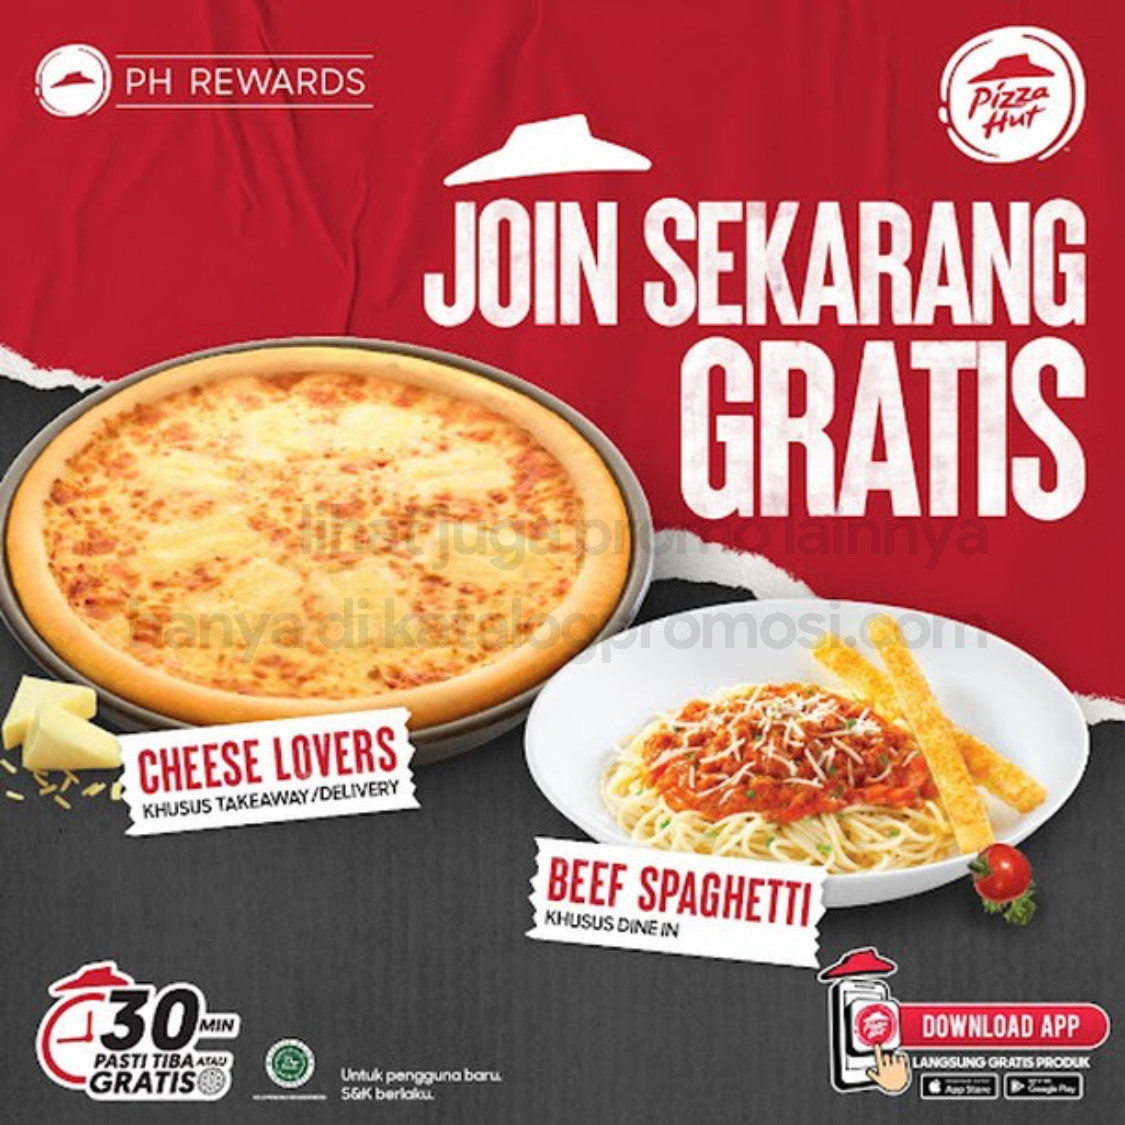 JOIN APLIKASI PIZZA HUT INDONESIA Bisa Dapetin Pan Regular Cheese Lovers Pizza (Takeaway/Delivery) dan Beef Spaghetti (Dine In) GRATIS*!